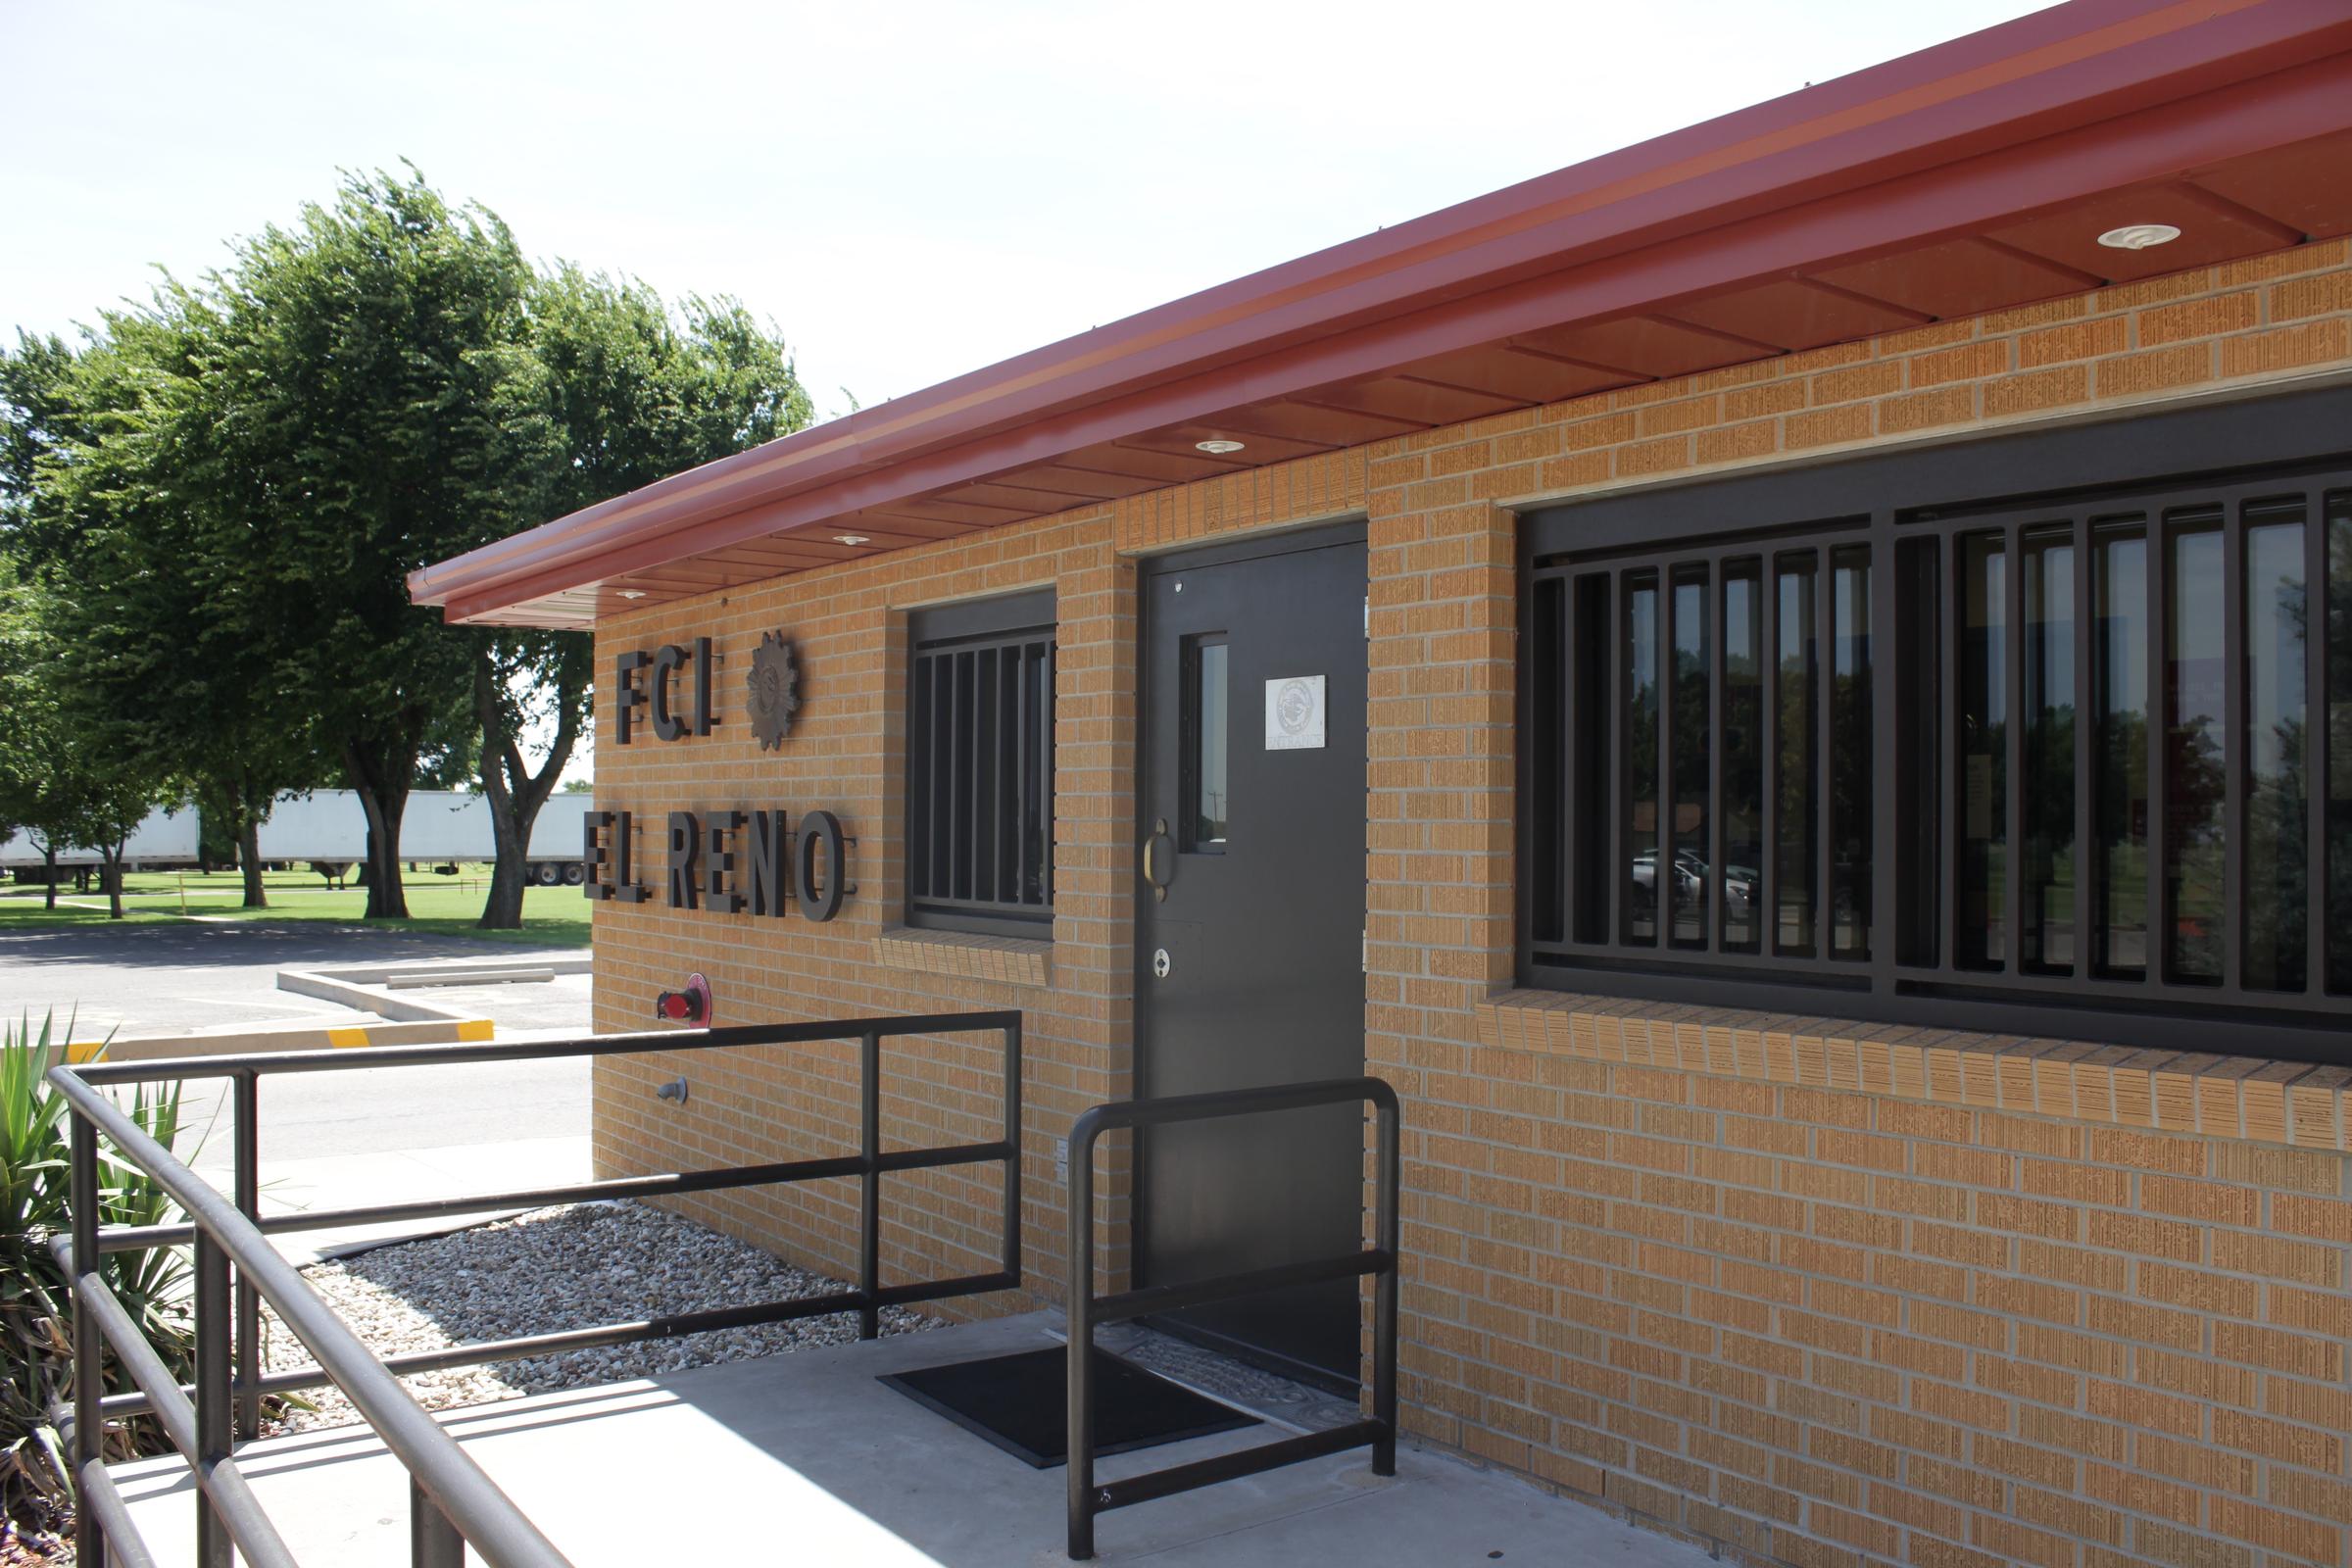 Obama Praises El Reno Prison s Programs Calls For Corrections Reform